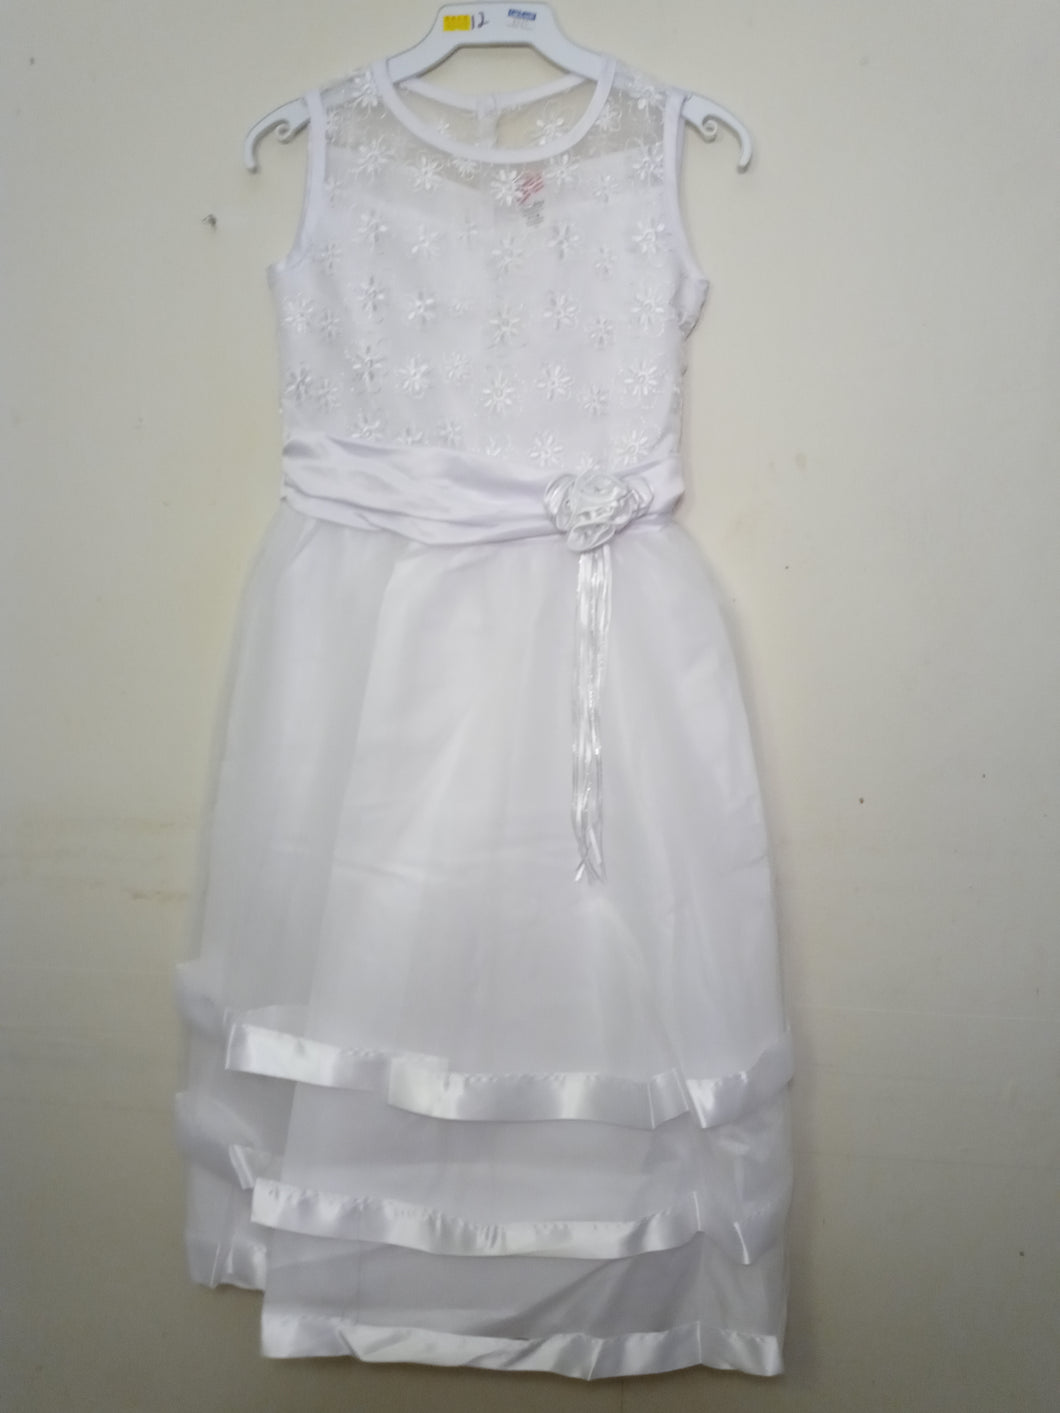 SABALAND GIRLS SIZE 12 WHITE FORMAL DRESS. NEW - # 3325